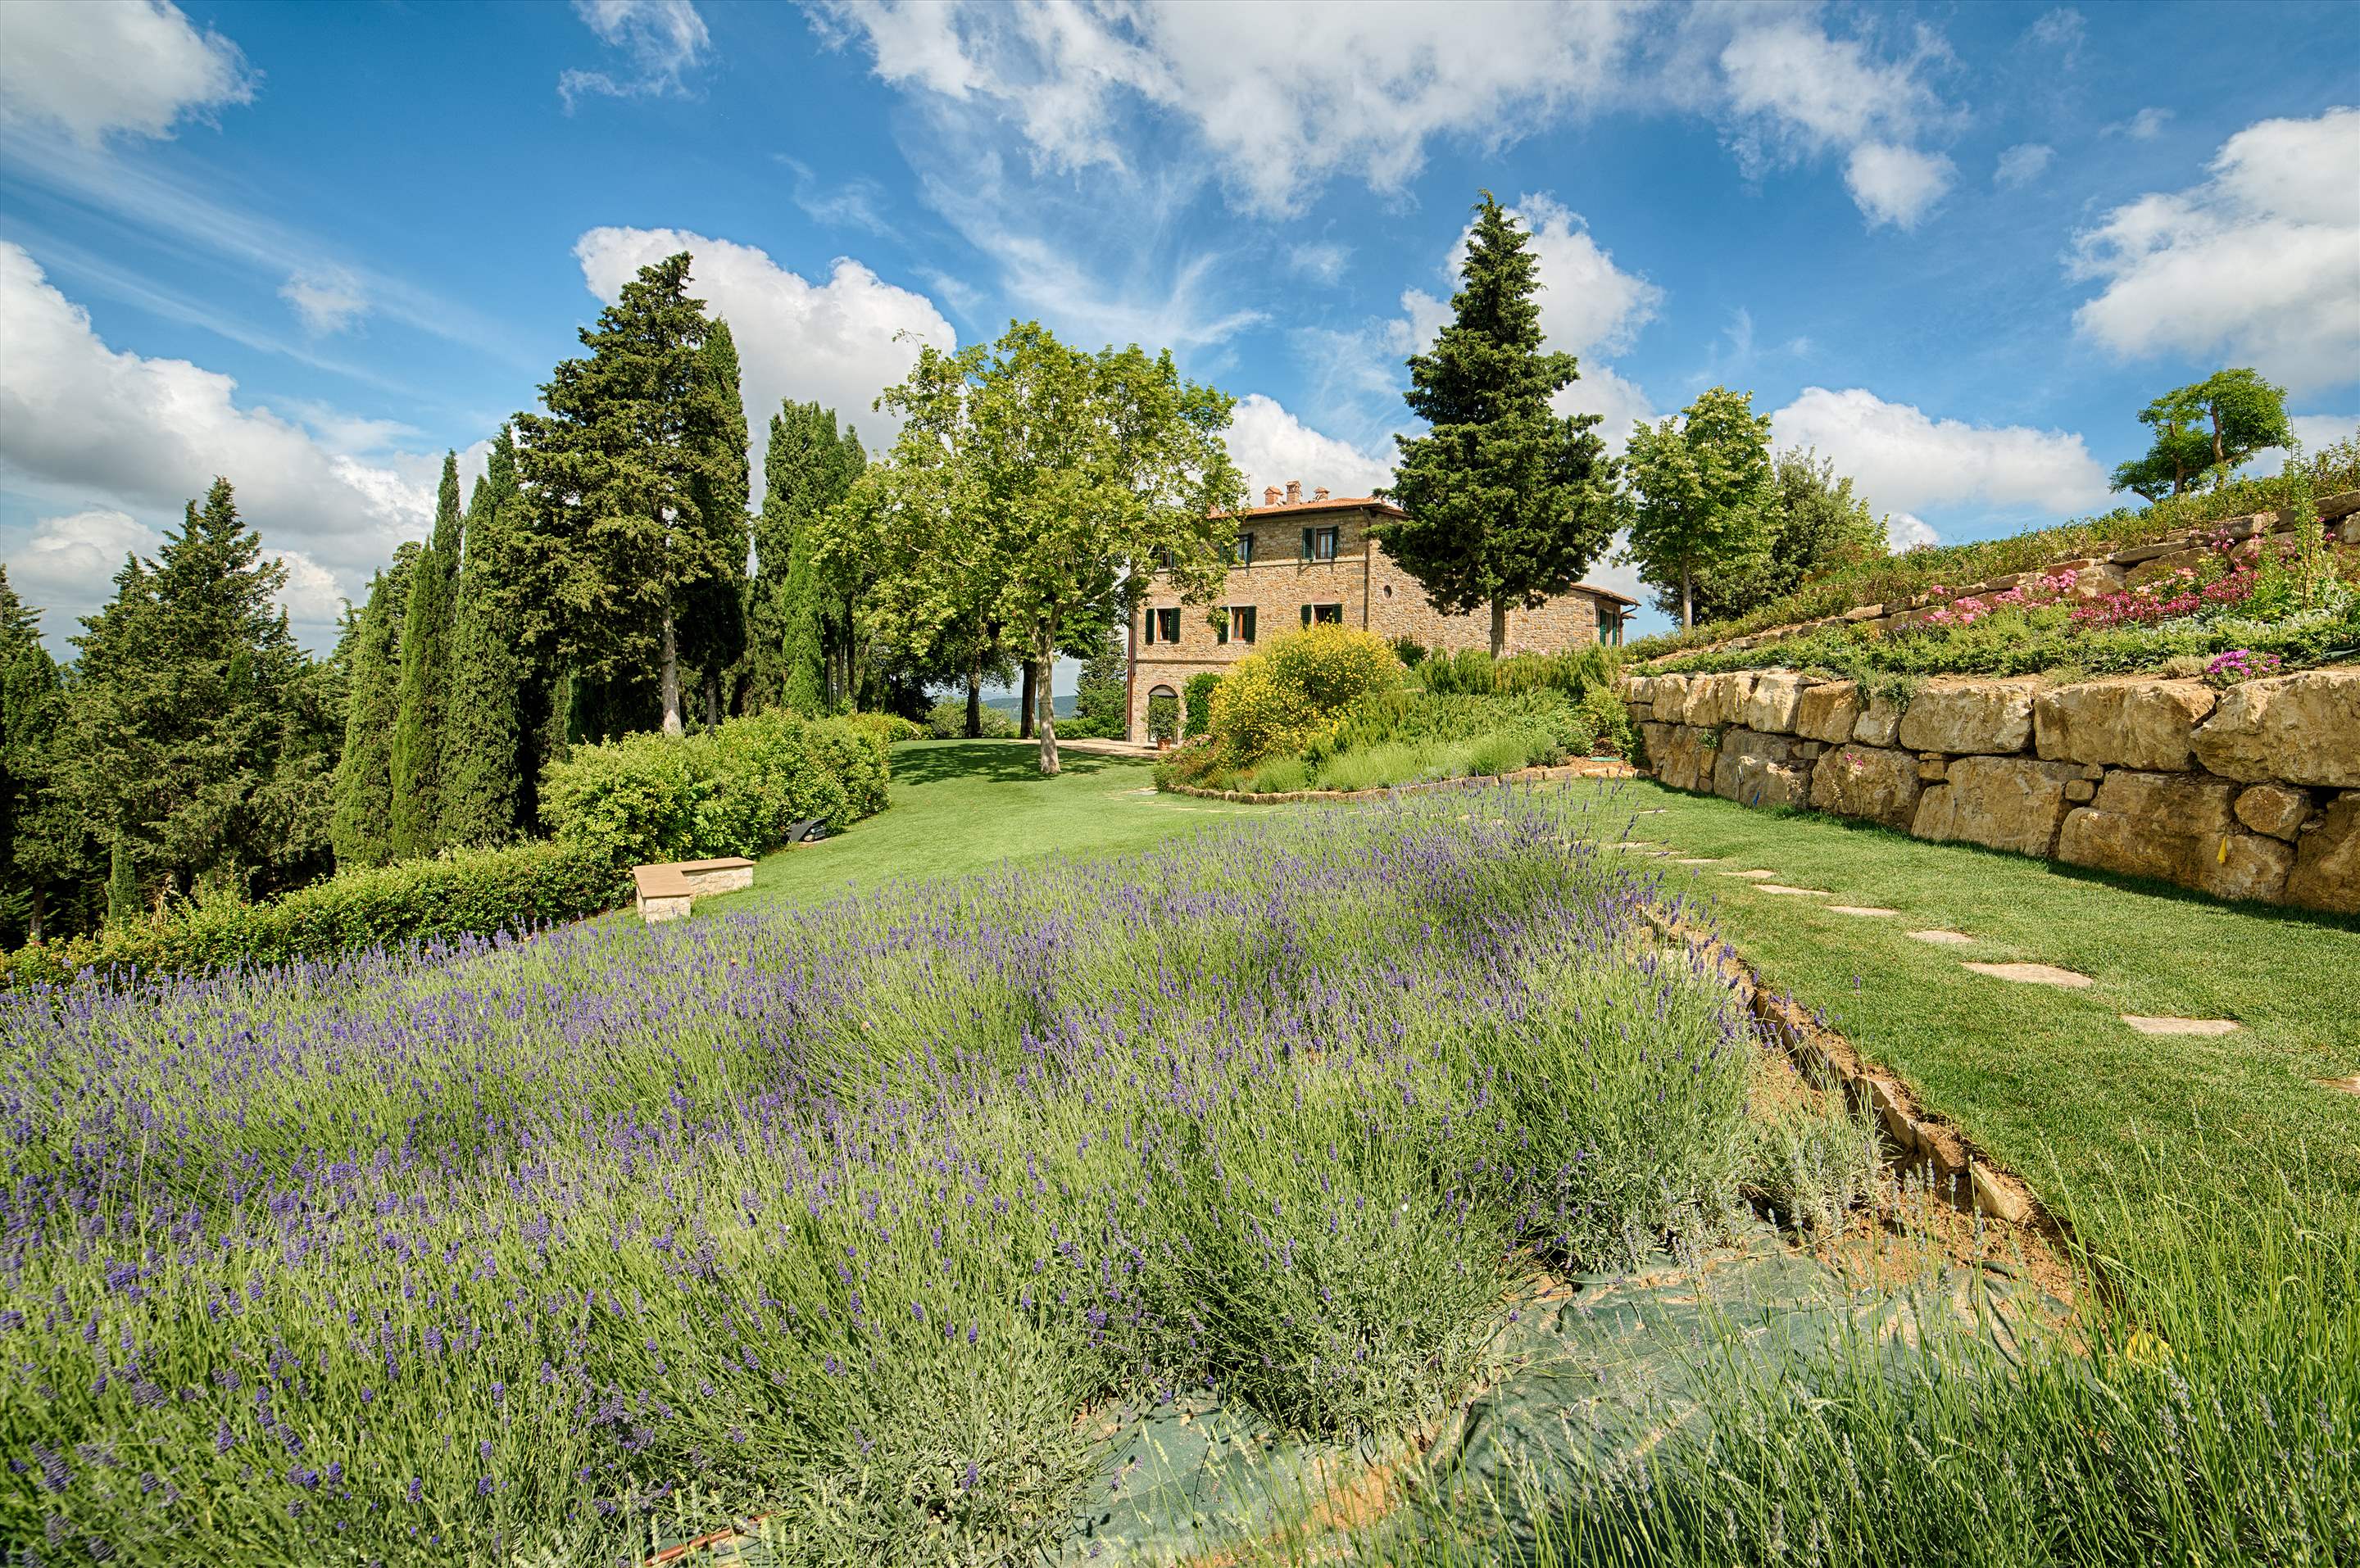 Villa La Valetta, 1 Bed Apt Ulivo, 1 bedroom villa in Chianti & Countryside, Tuscany Photo #2